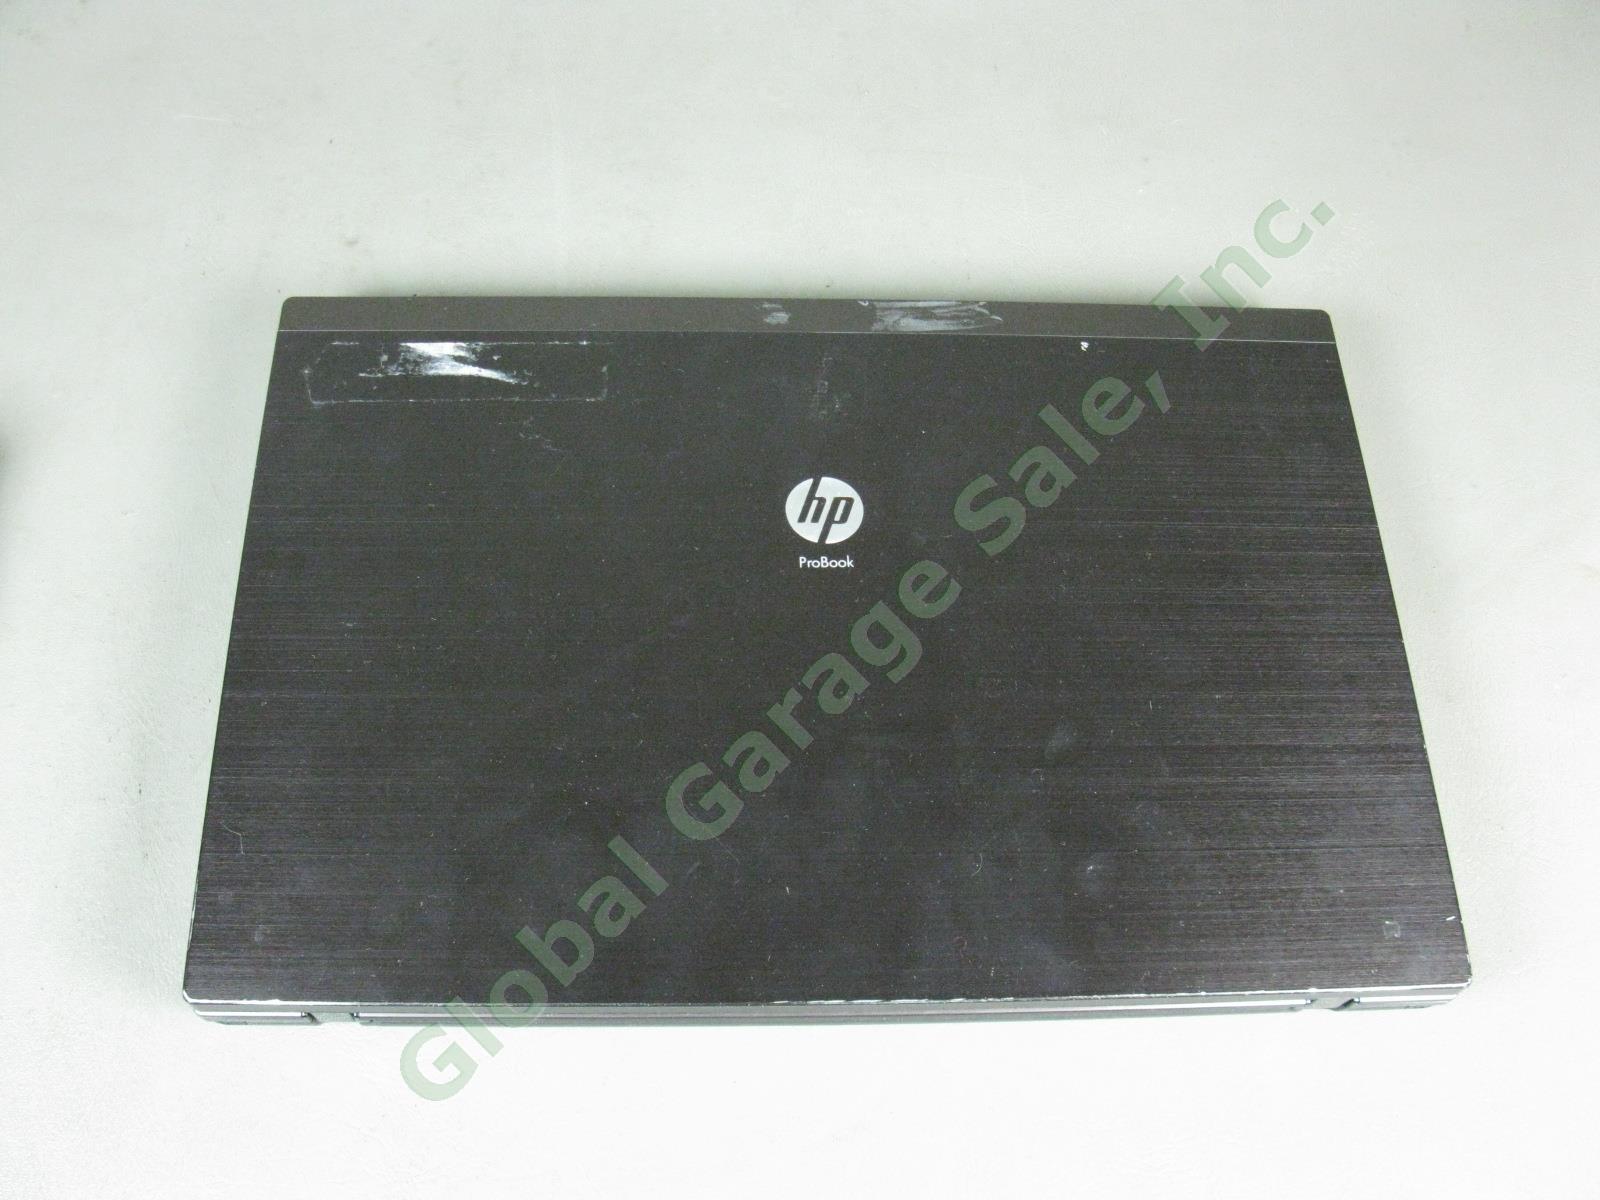 HP 4520s ProBook 15.6" Laptop Computer Intel i5 M560 2.67GHz 2GB RAM Win 7 Pro 5